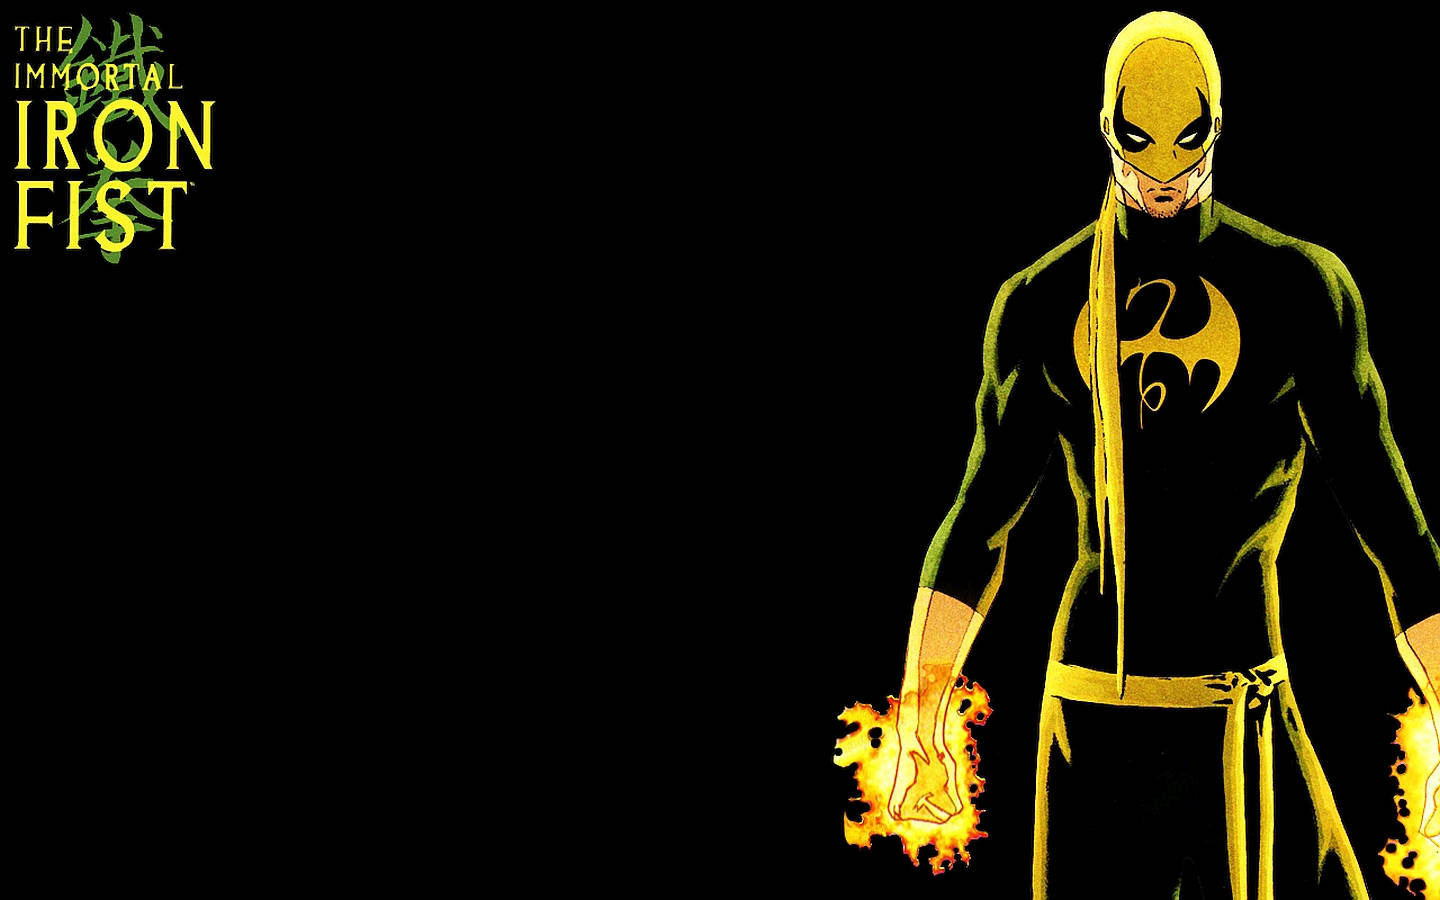 A Vigilant Iron Fist - Comic Book Illustration Background